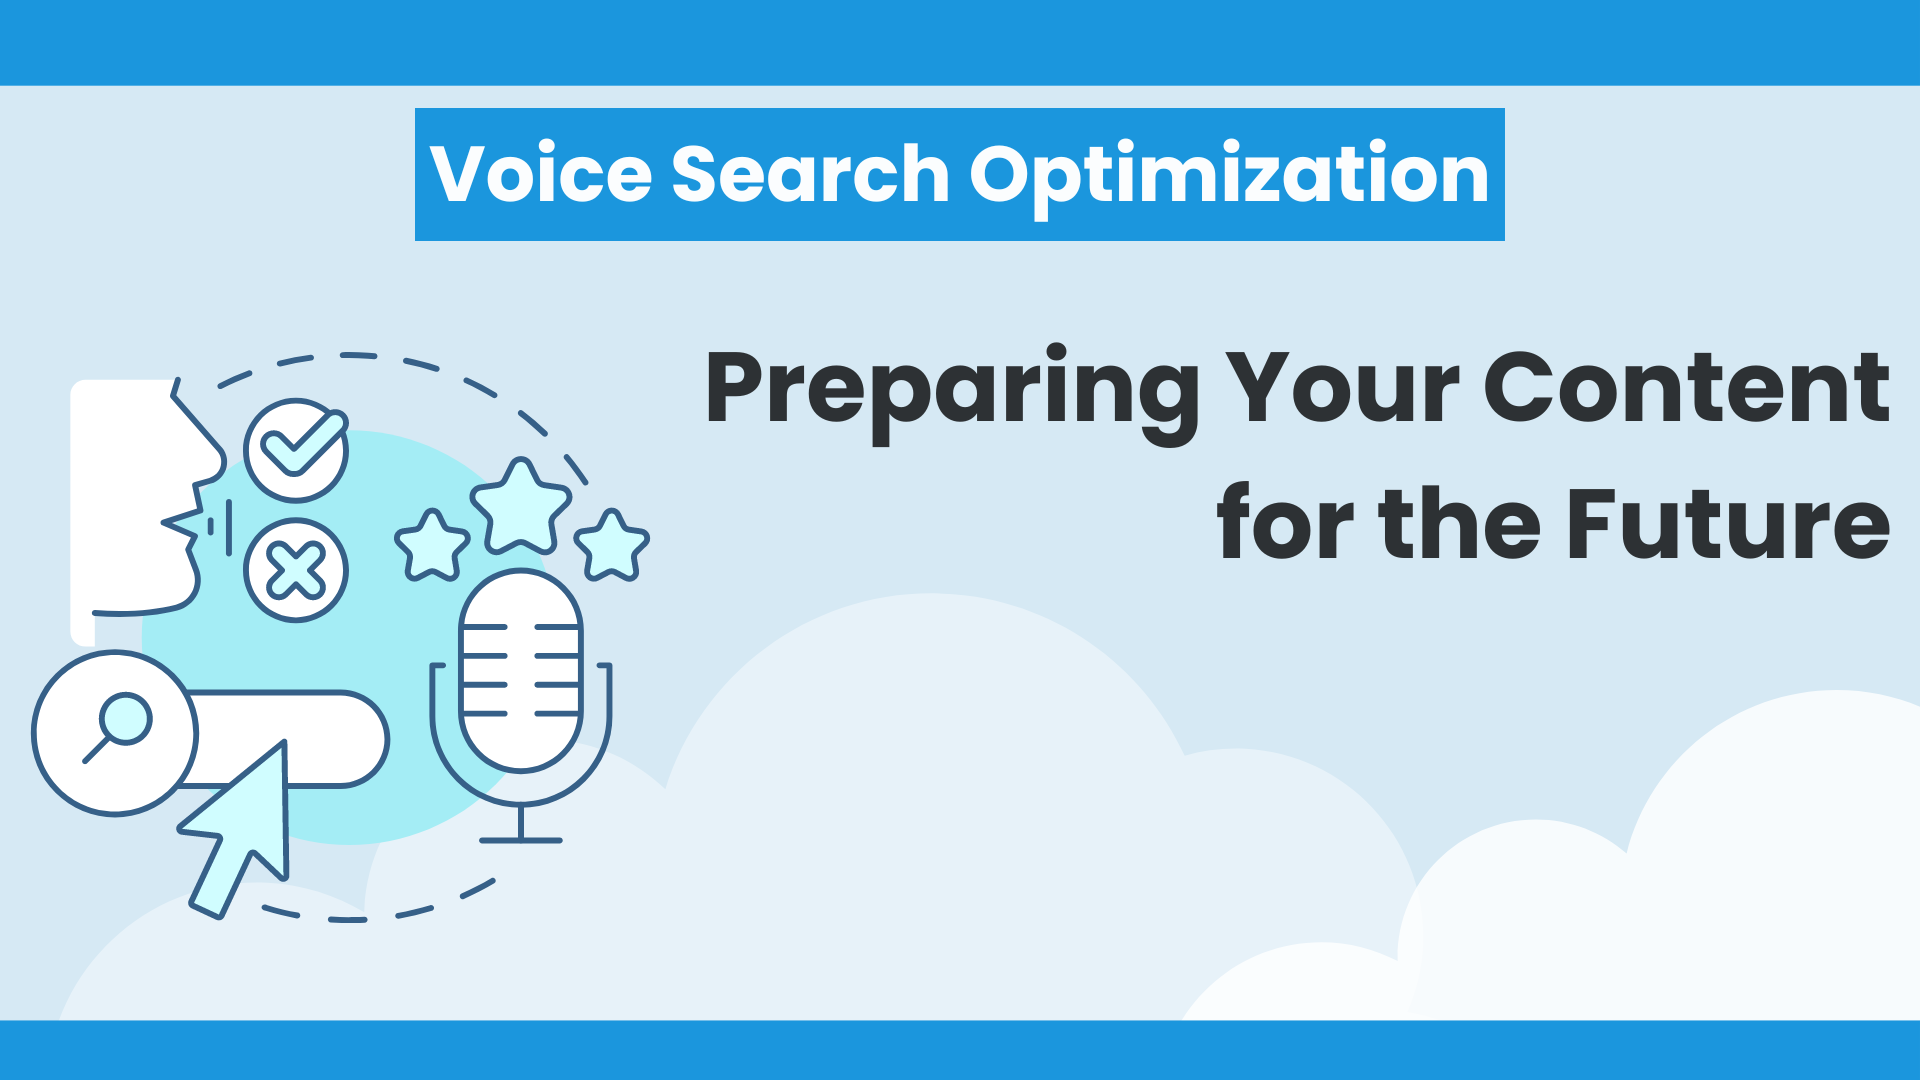 Voice Search Optimization: Preparing Your Content for the Future